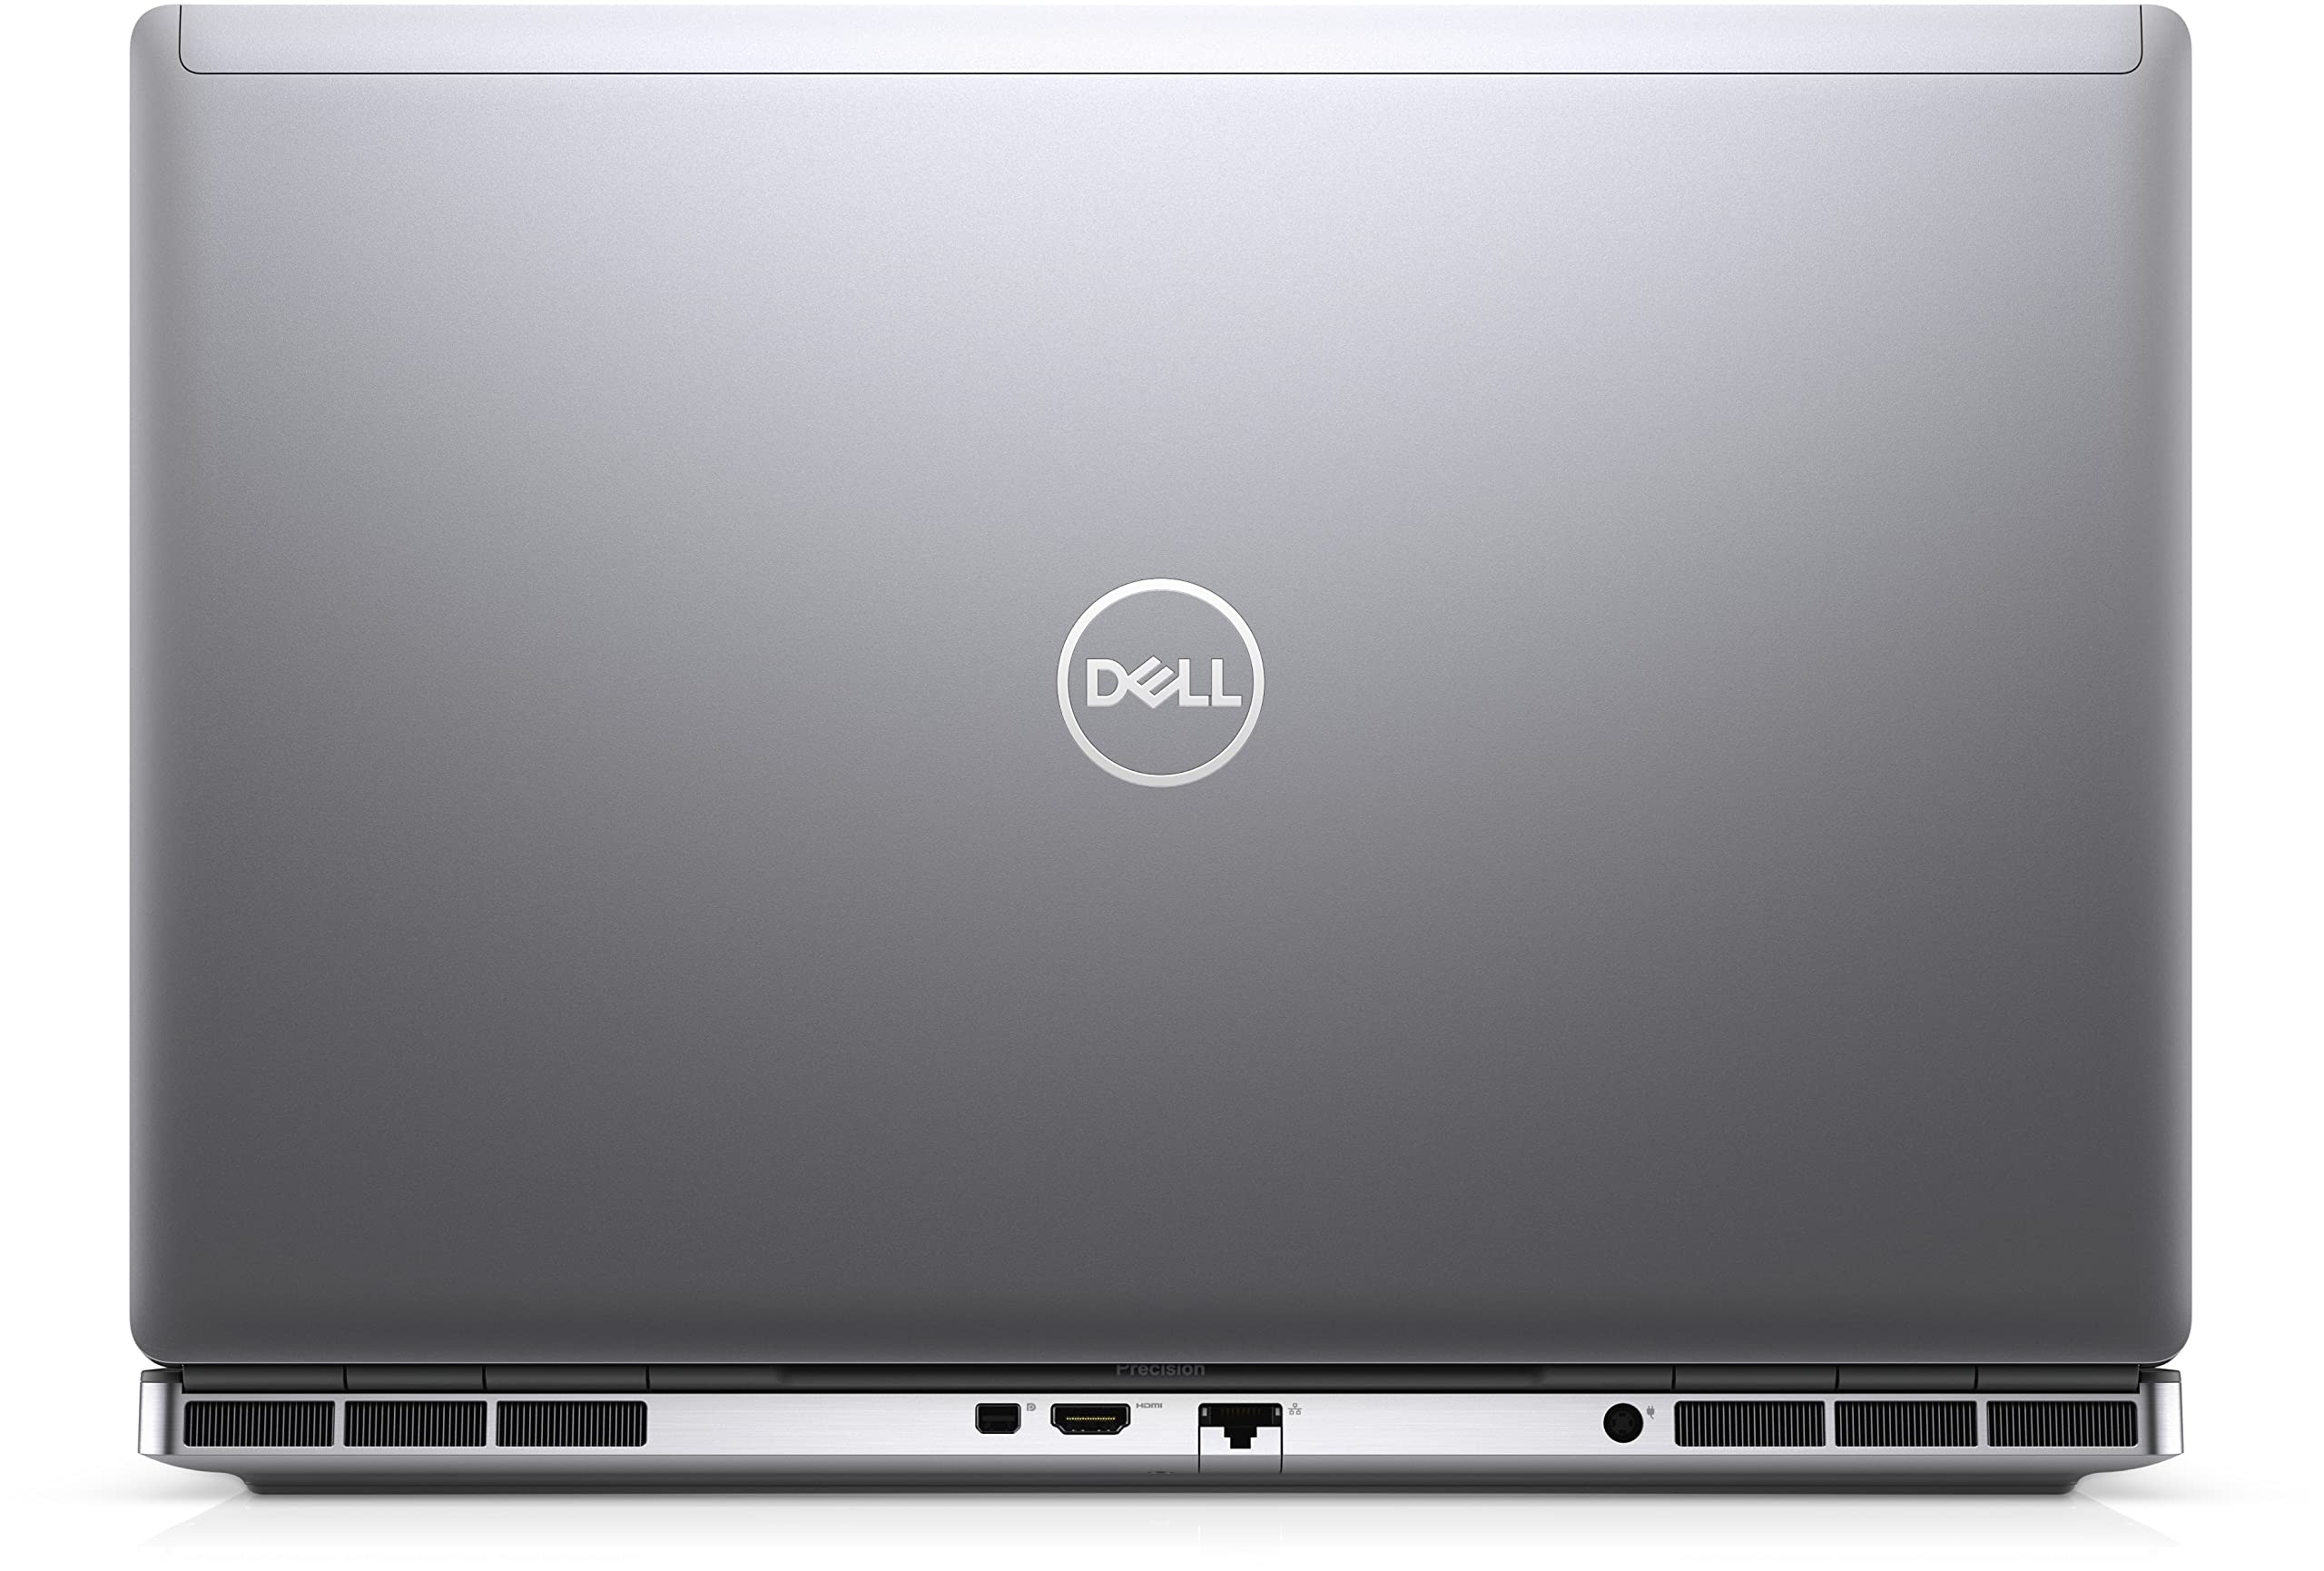 Dell Precision 7760 Workstation Laptop PC, FHD Non-Touch, Intel Core i9-11950H Processor, 32GB Ram, 2TB NVMe SSD, HDMI, Thunderbolt, Windows 10 Pro (Renewed)